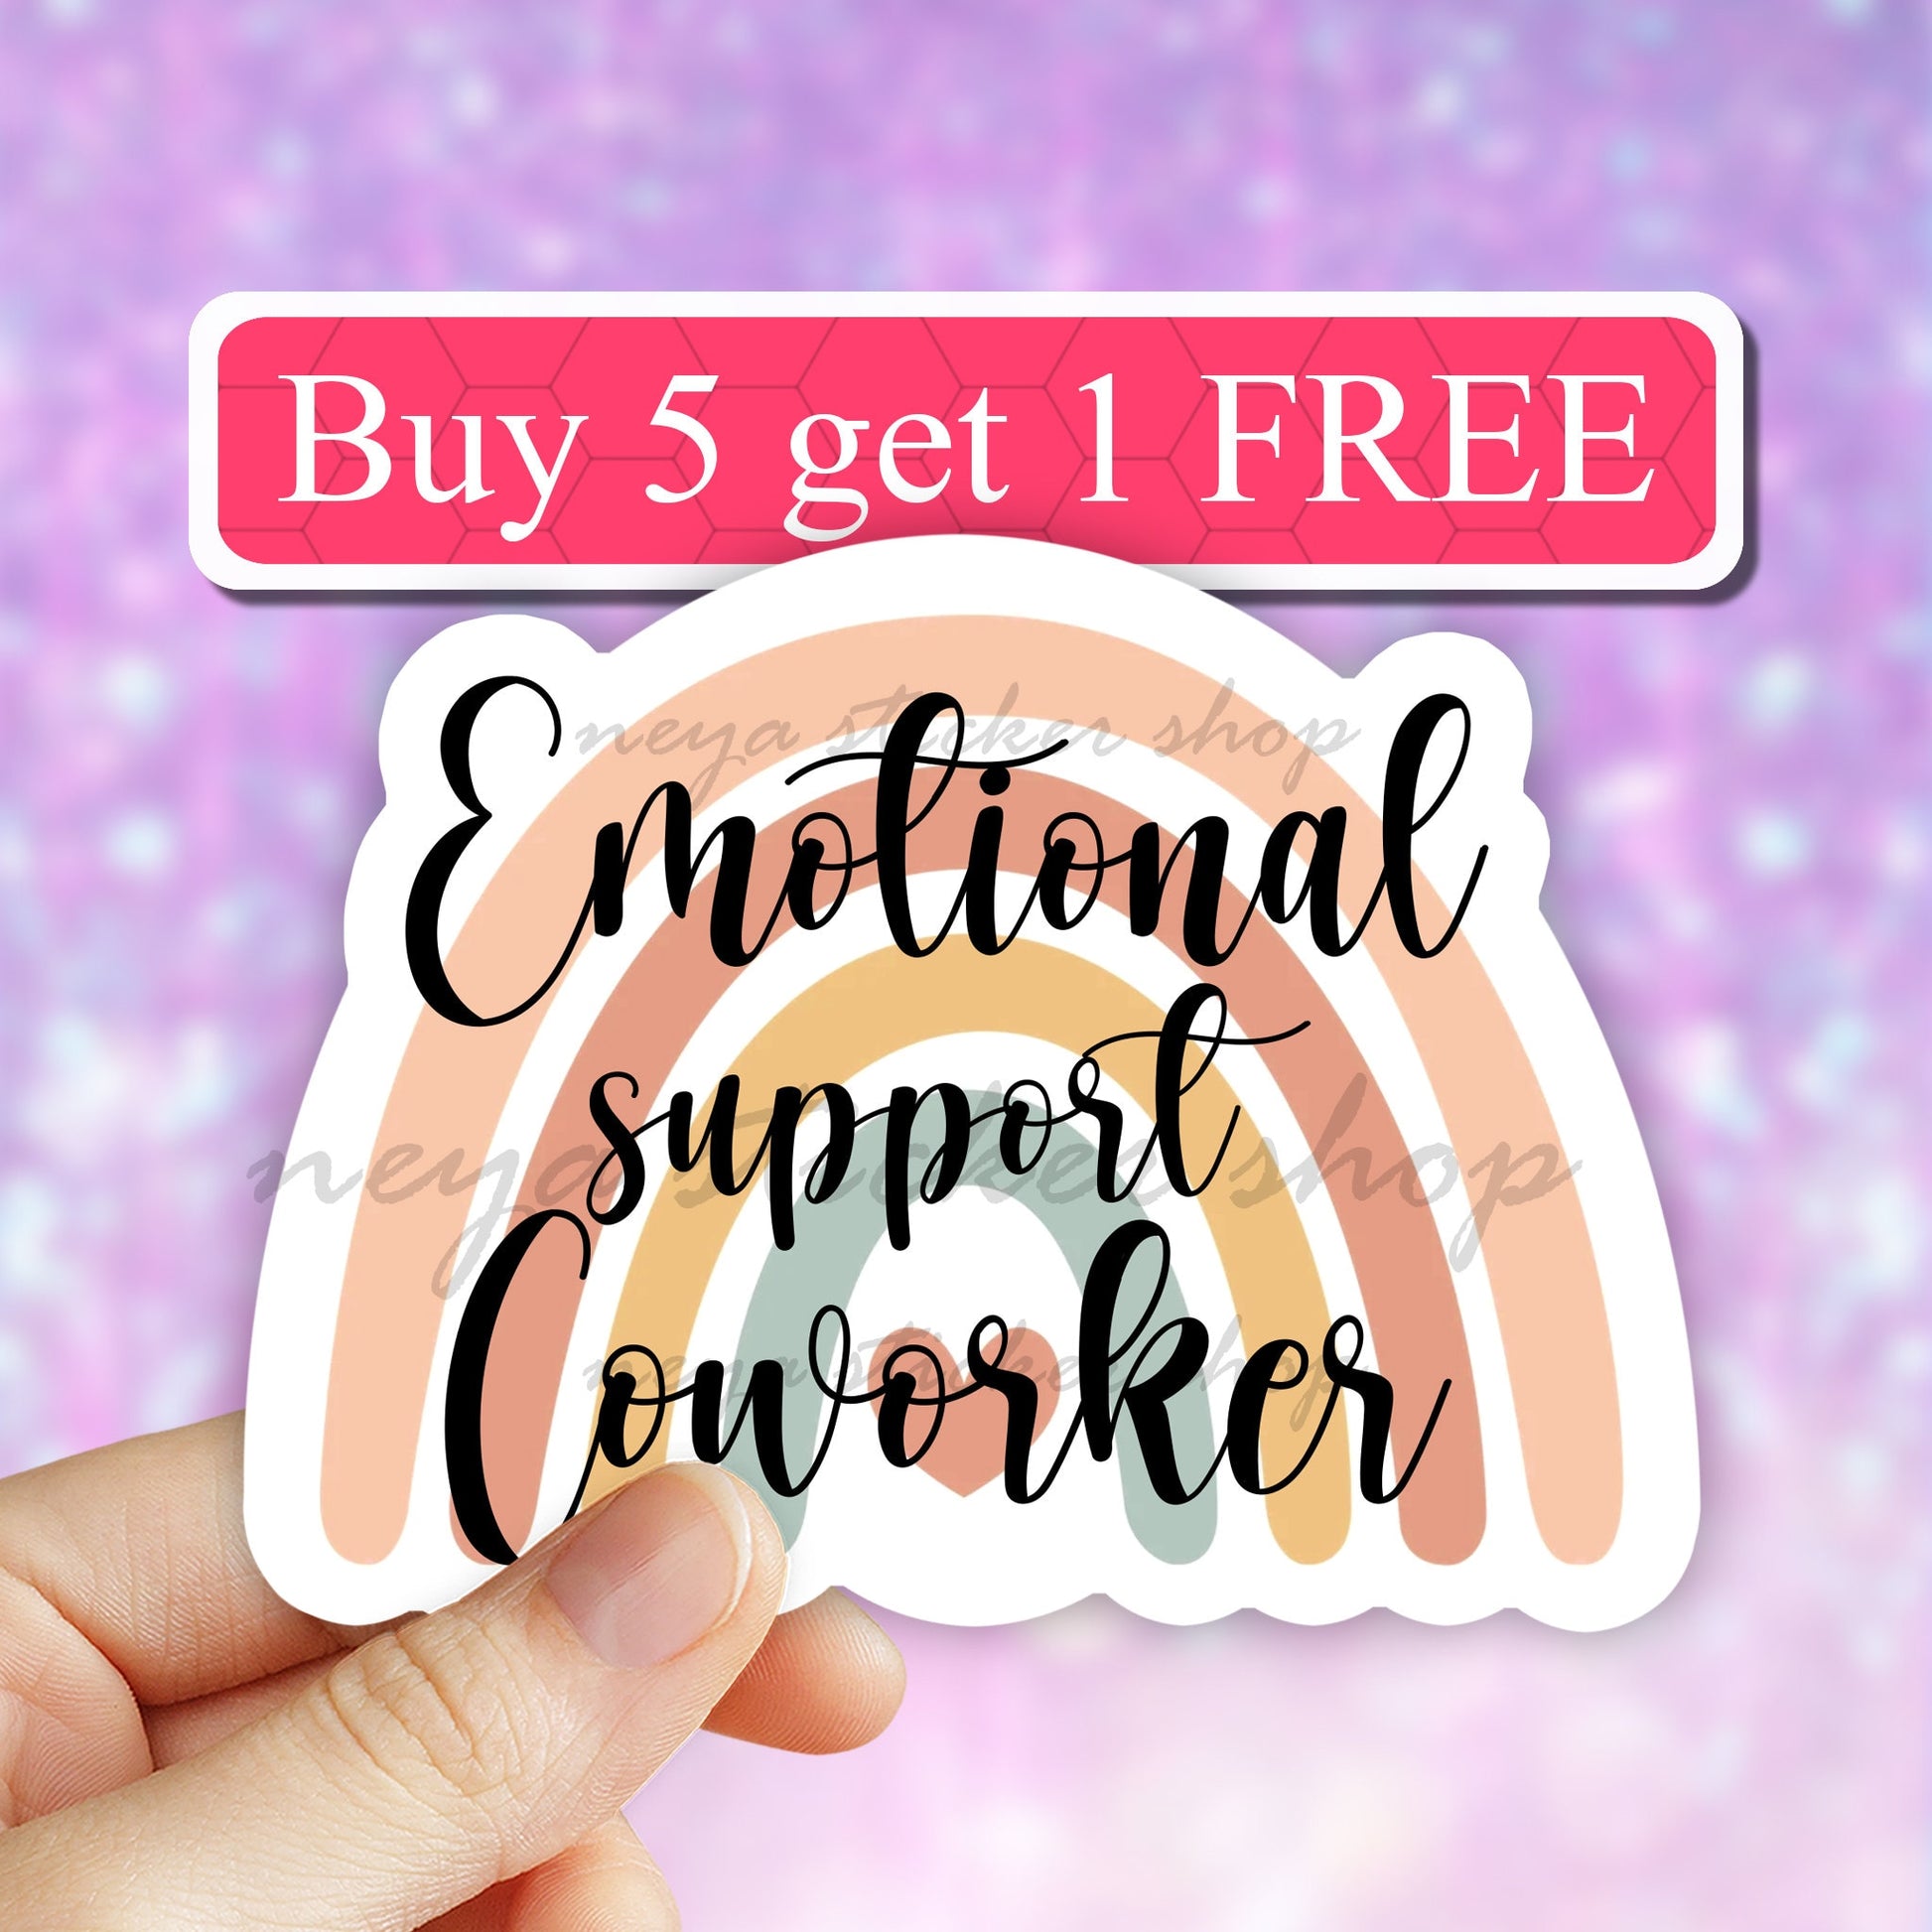 Emotional Support Coworker Vinyl Sticker, Coworker Gift, office